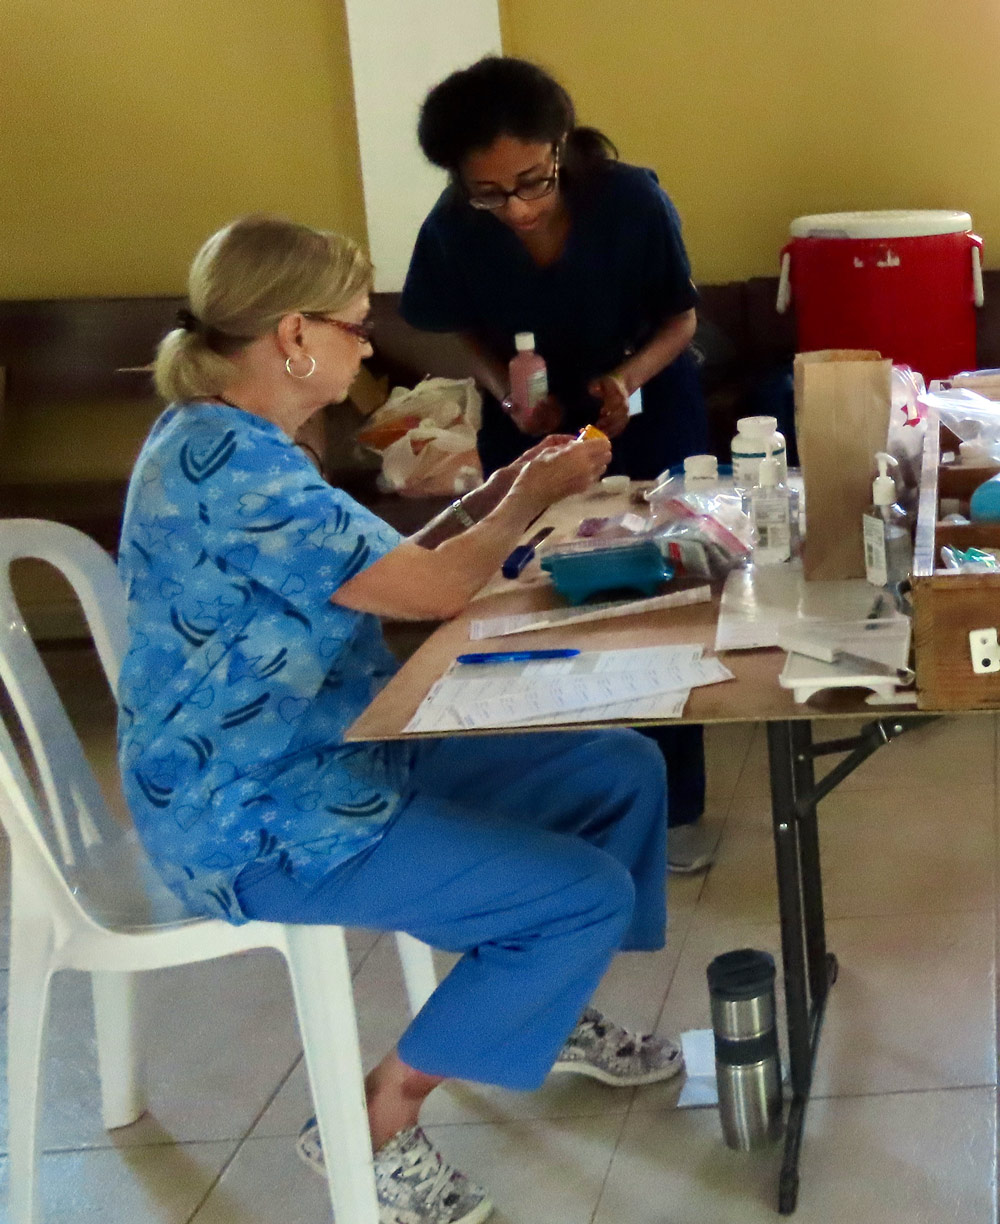 public health students working in the Dominican Republic providing care.